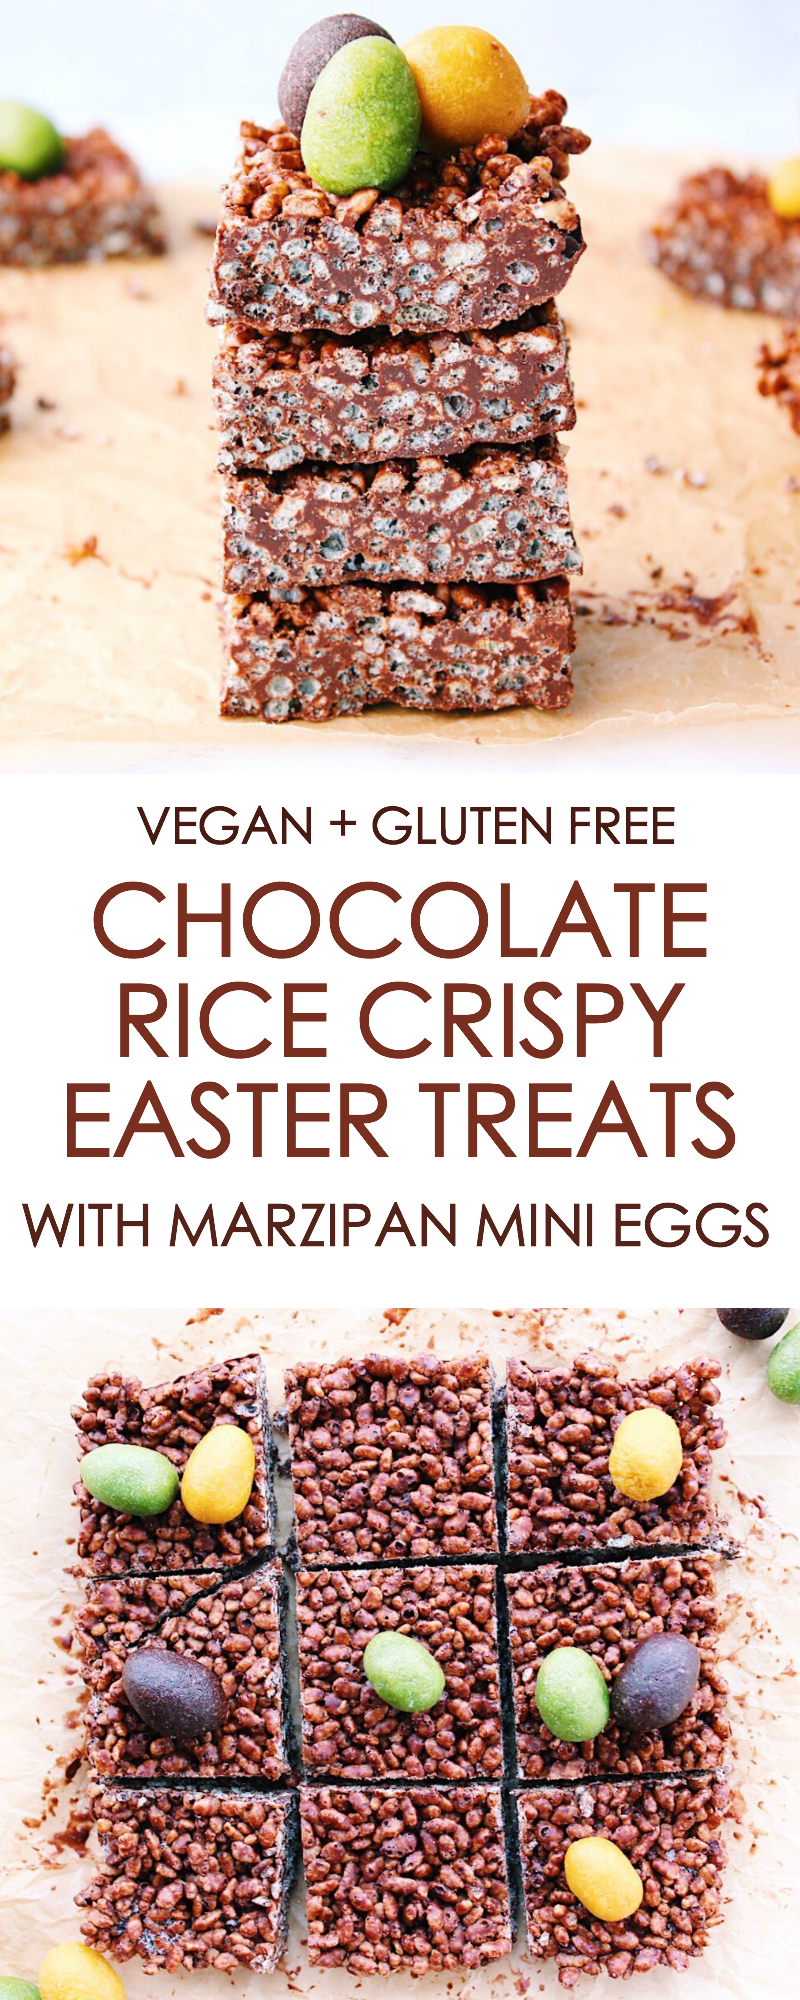 Chocolate Rice Crispy Treats with Marzipan Mini Eggs